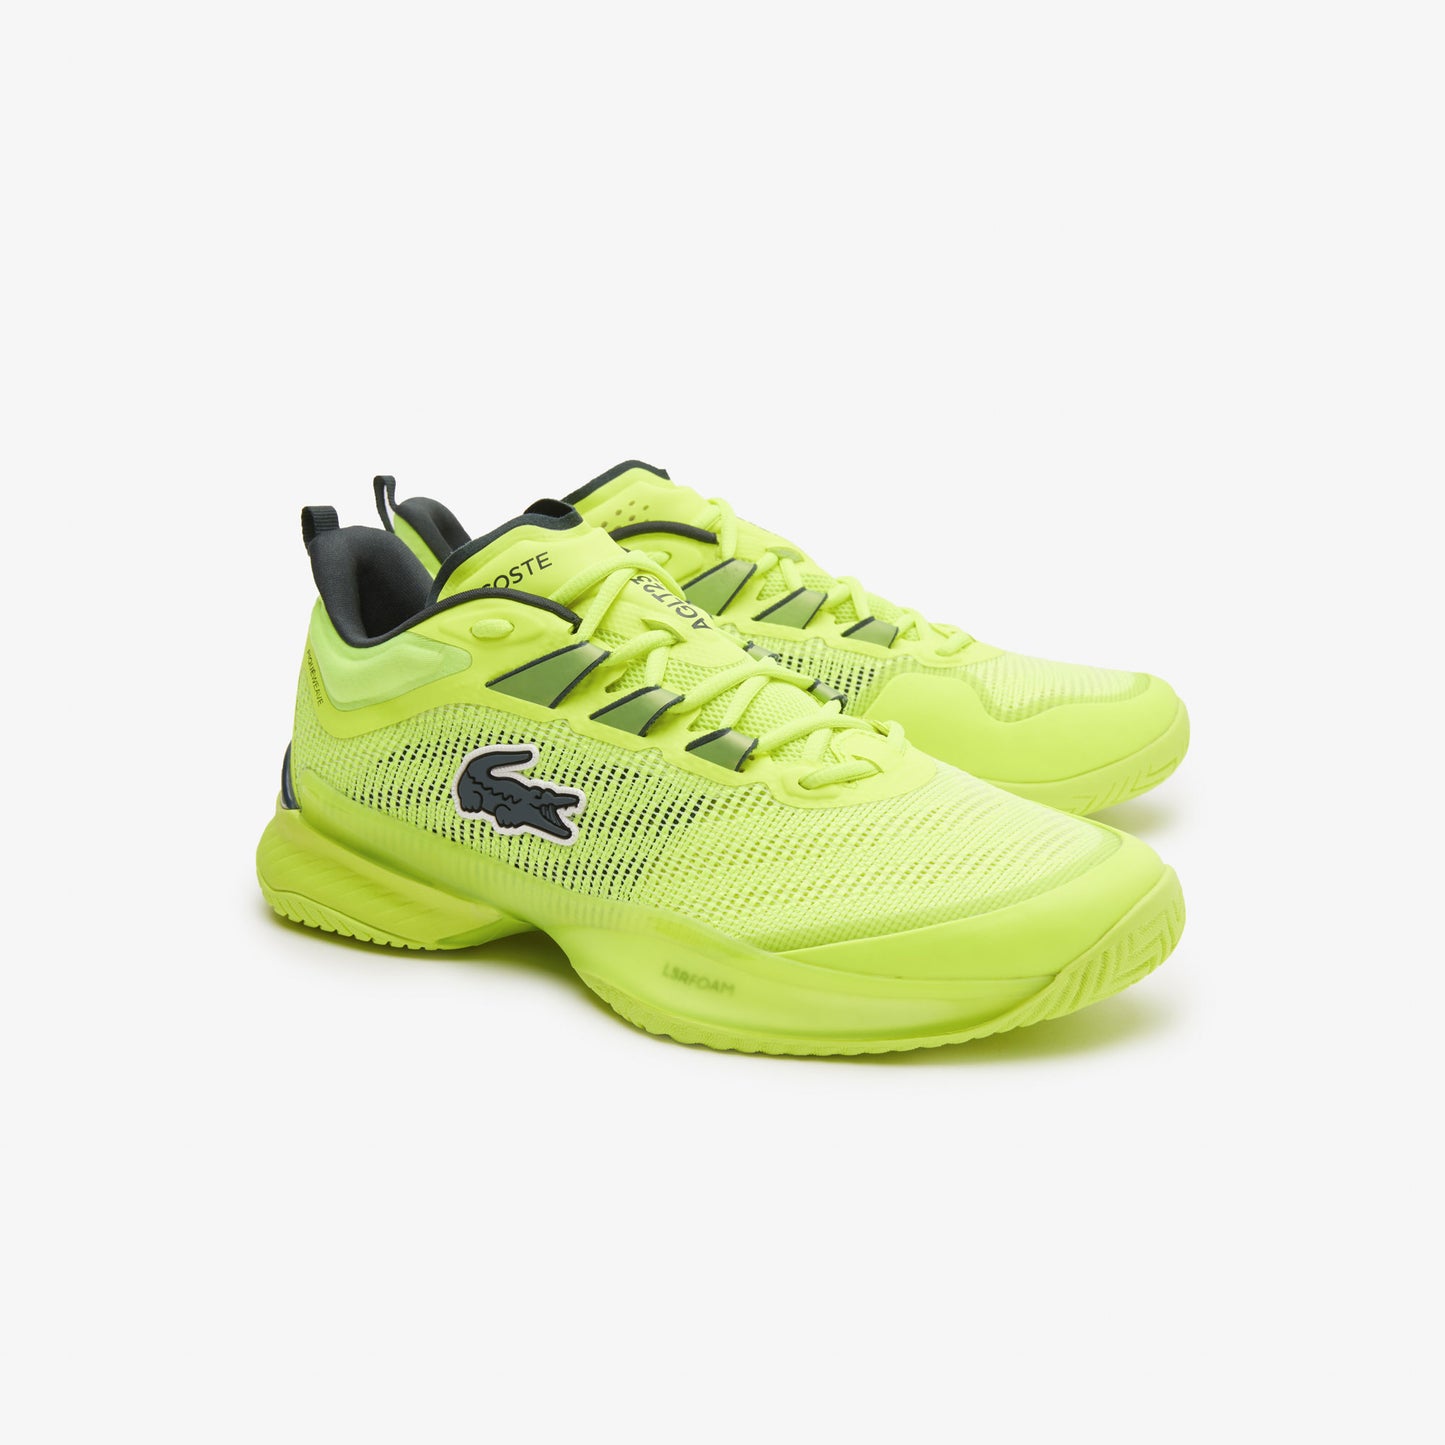 Lacoste AG-LT23 Ultra Men's Tennis Shoes Yellow (2)